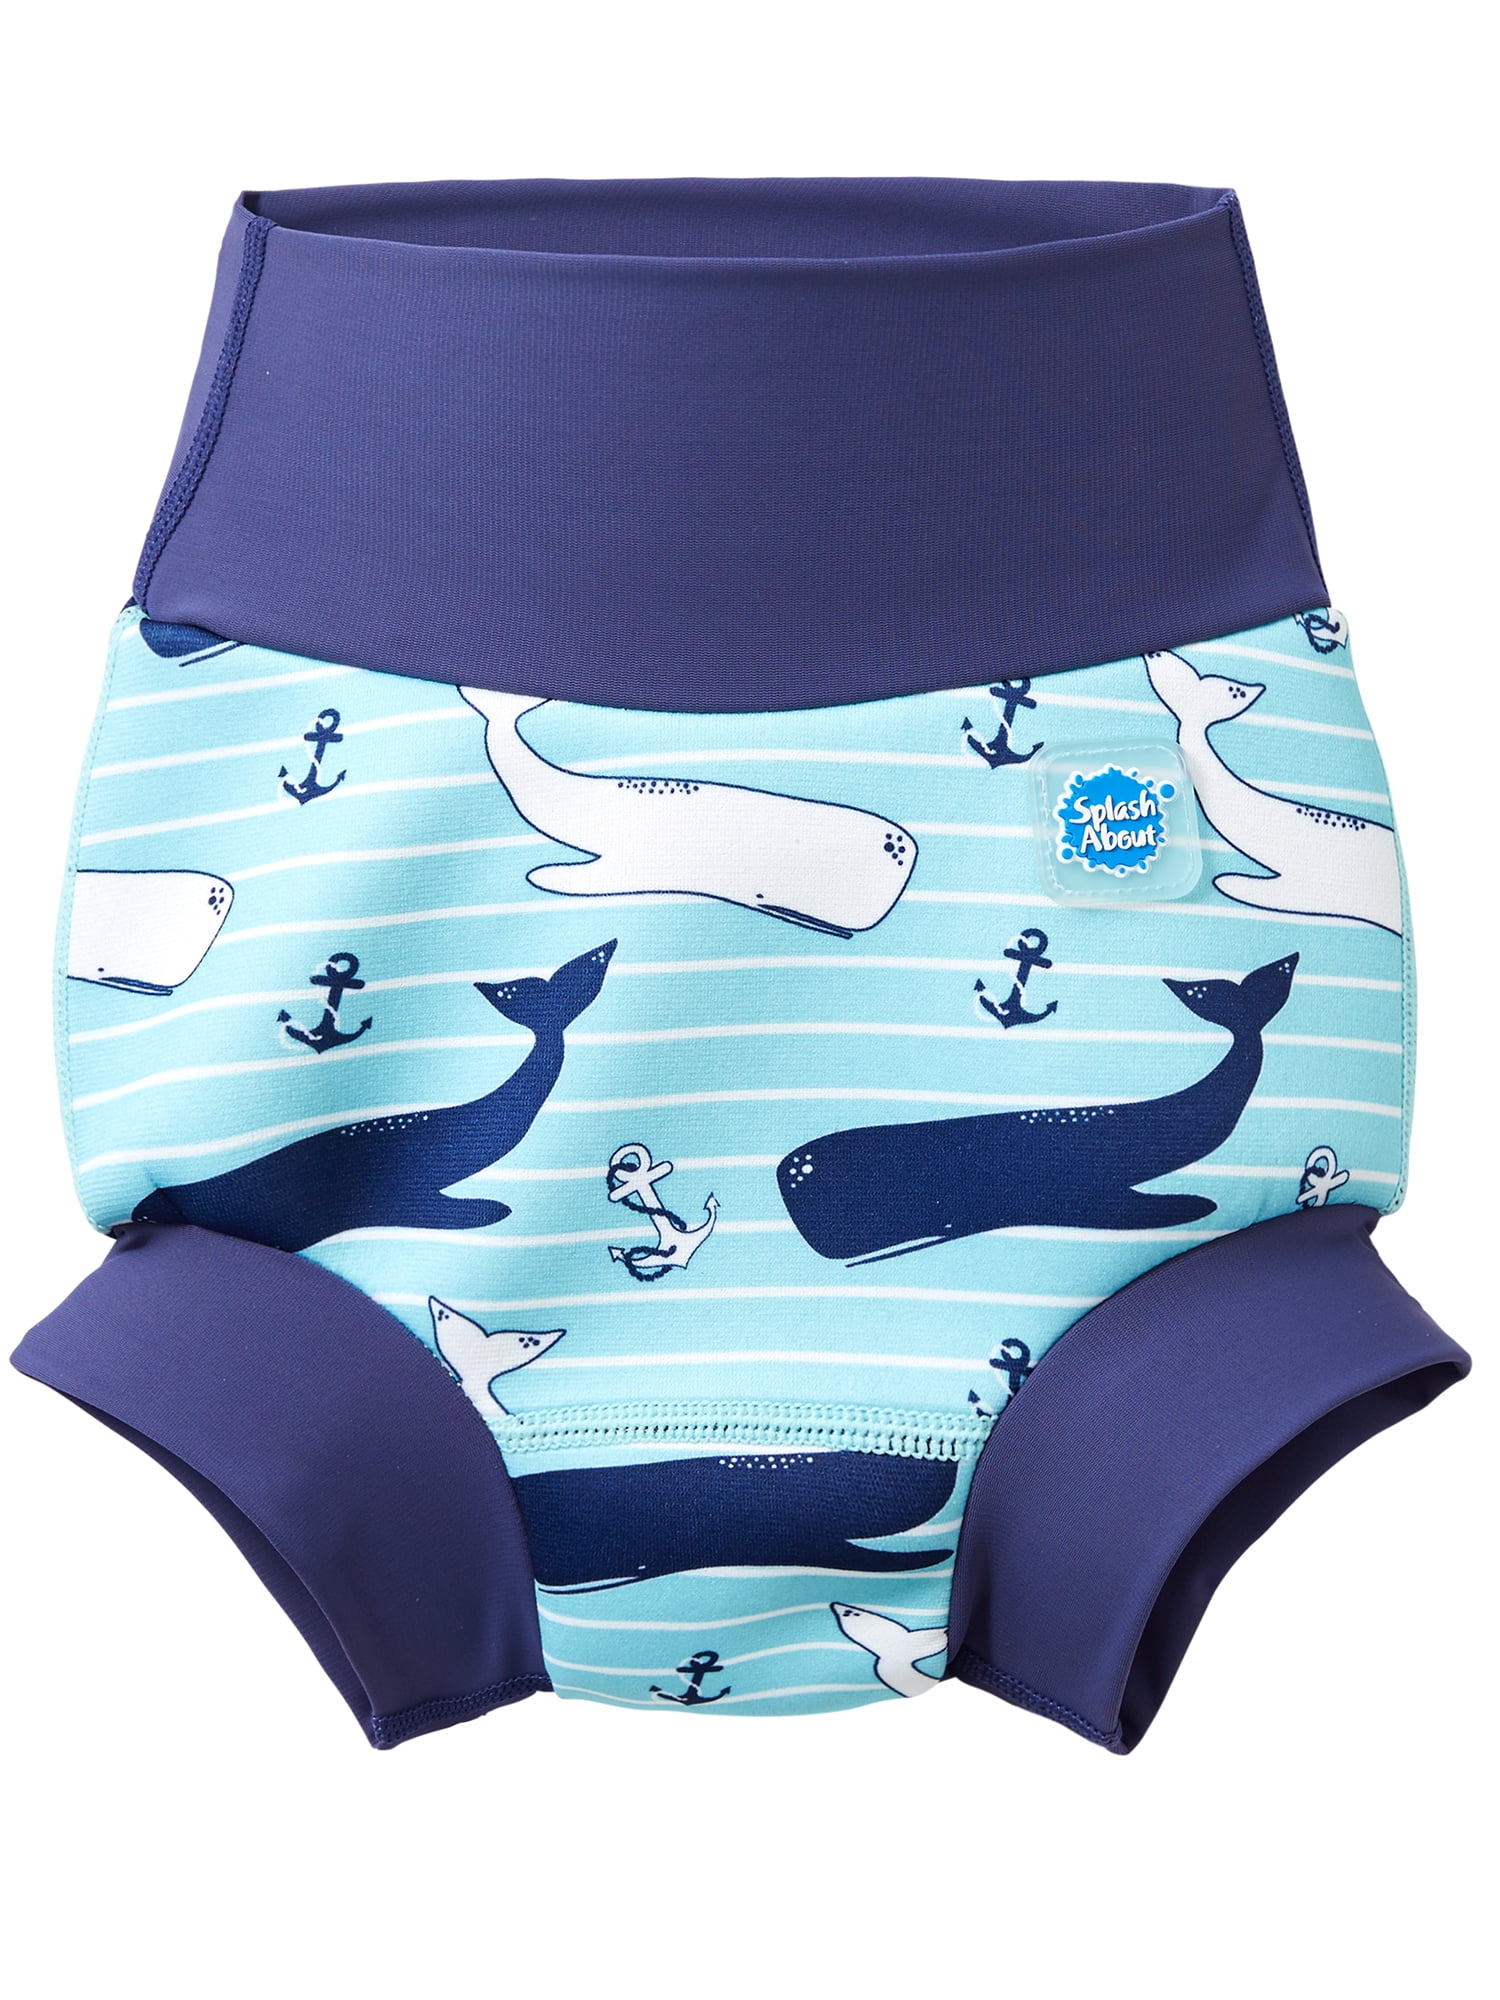 Orange Shark/Surfboard Swim Time Baby Boys Reusable Swim Diaper UPF 50 with Side Snaps Briefs L 12-18 Months